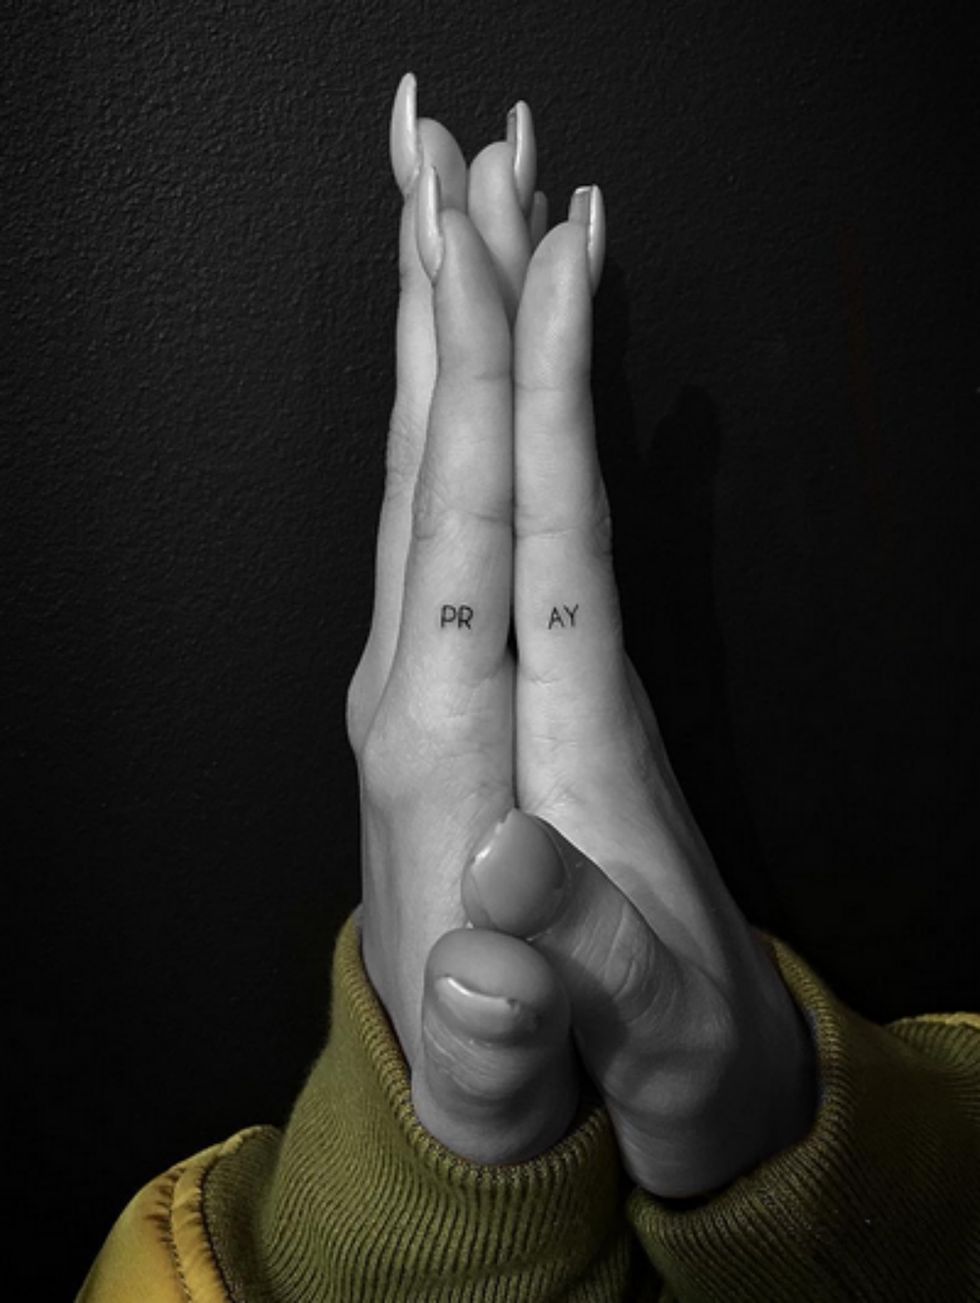 Finger, Wrist, Hand, Thumb, Gesture, Darkness, Nail, Sign language, Flesh, Sweater, 